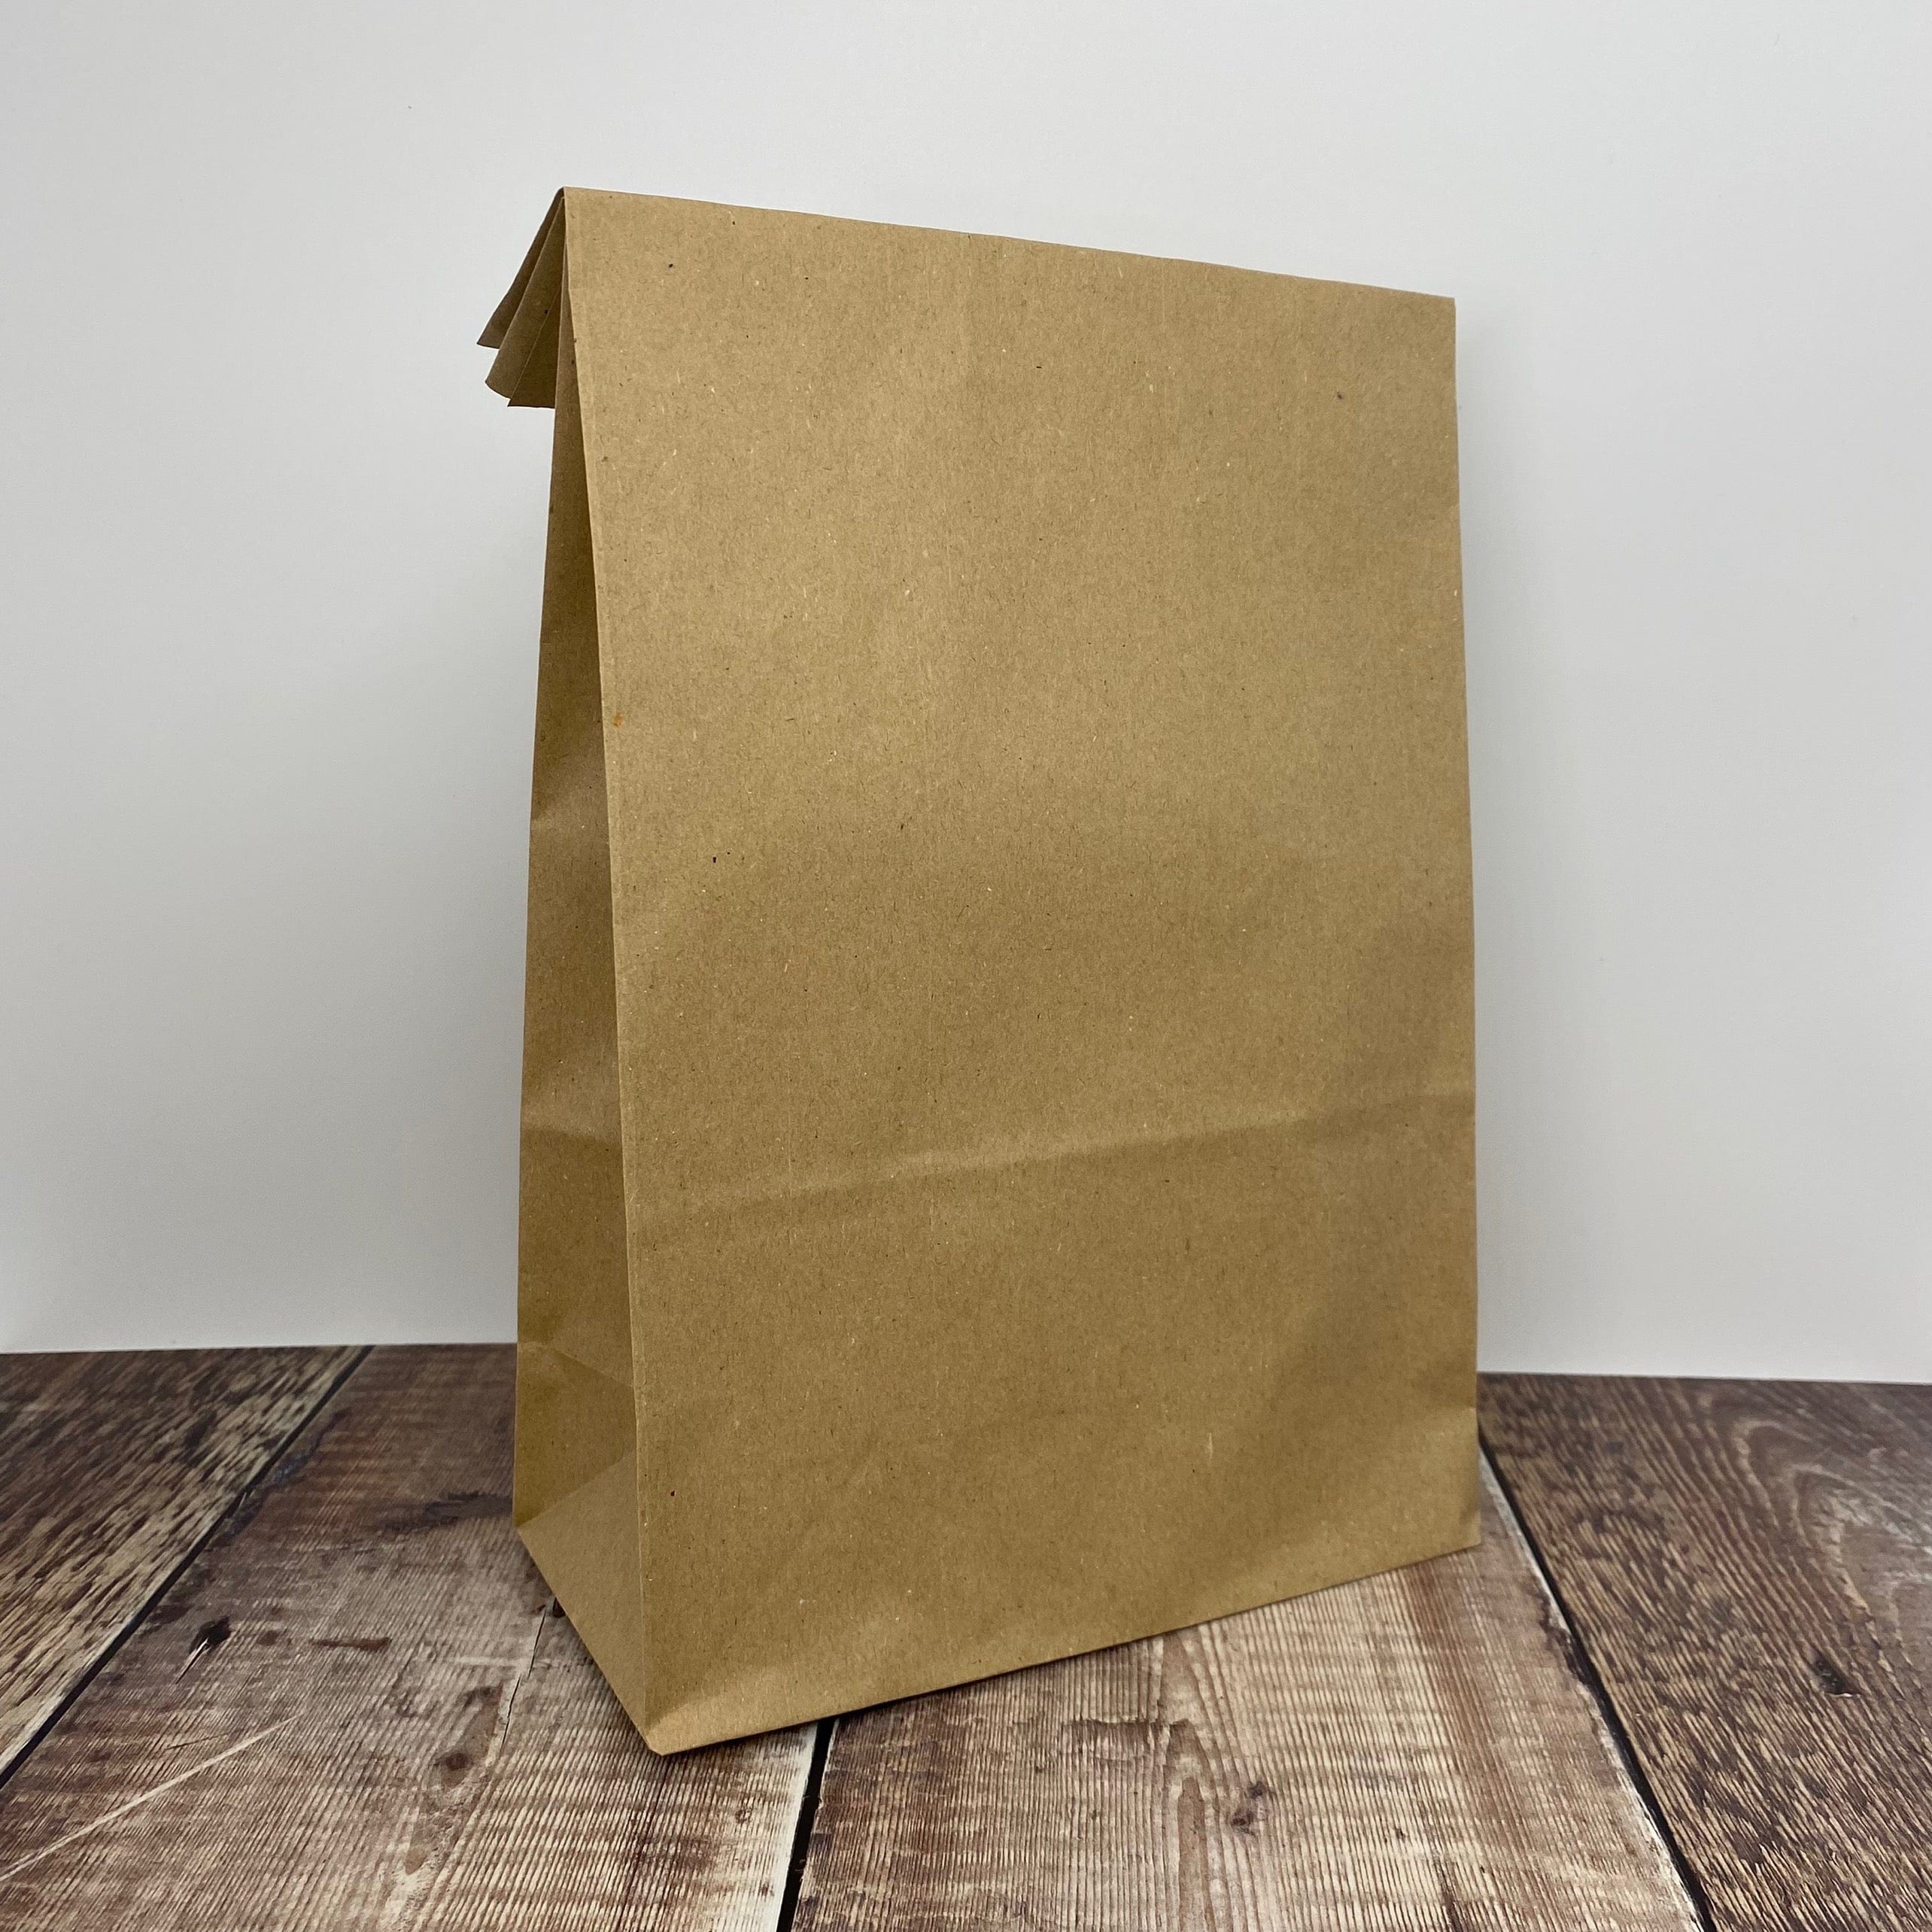 Unprinted & Printed Paper Bags, UK | Big Brown Carrier Bag